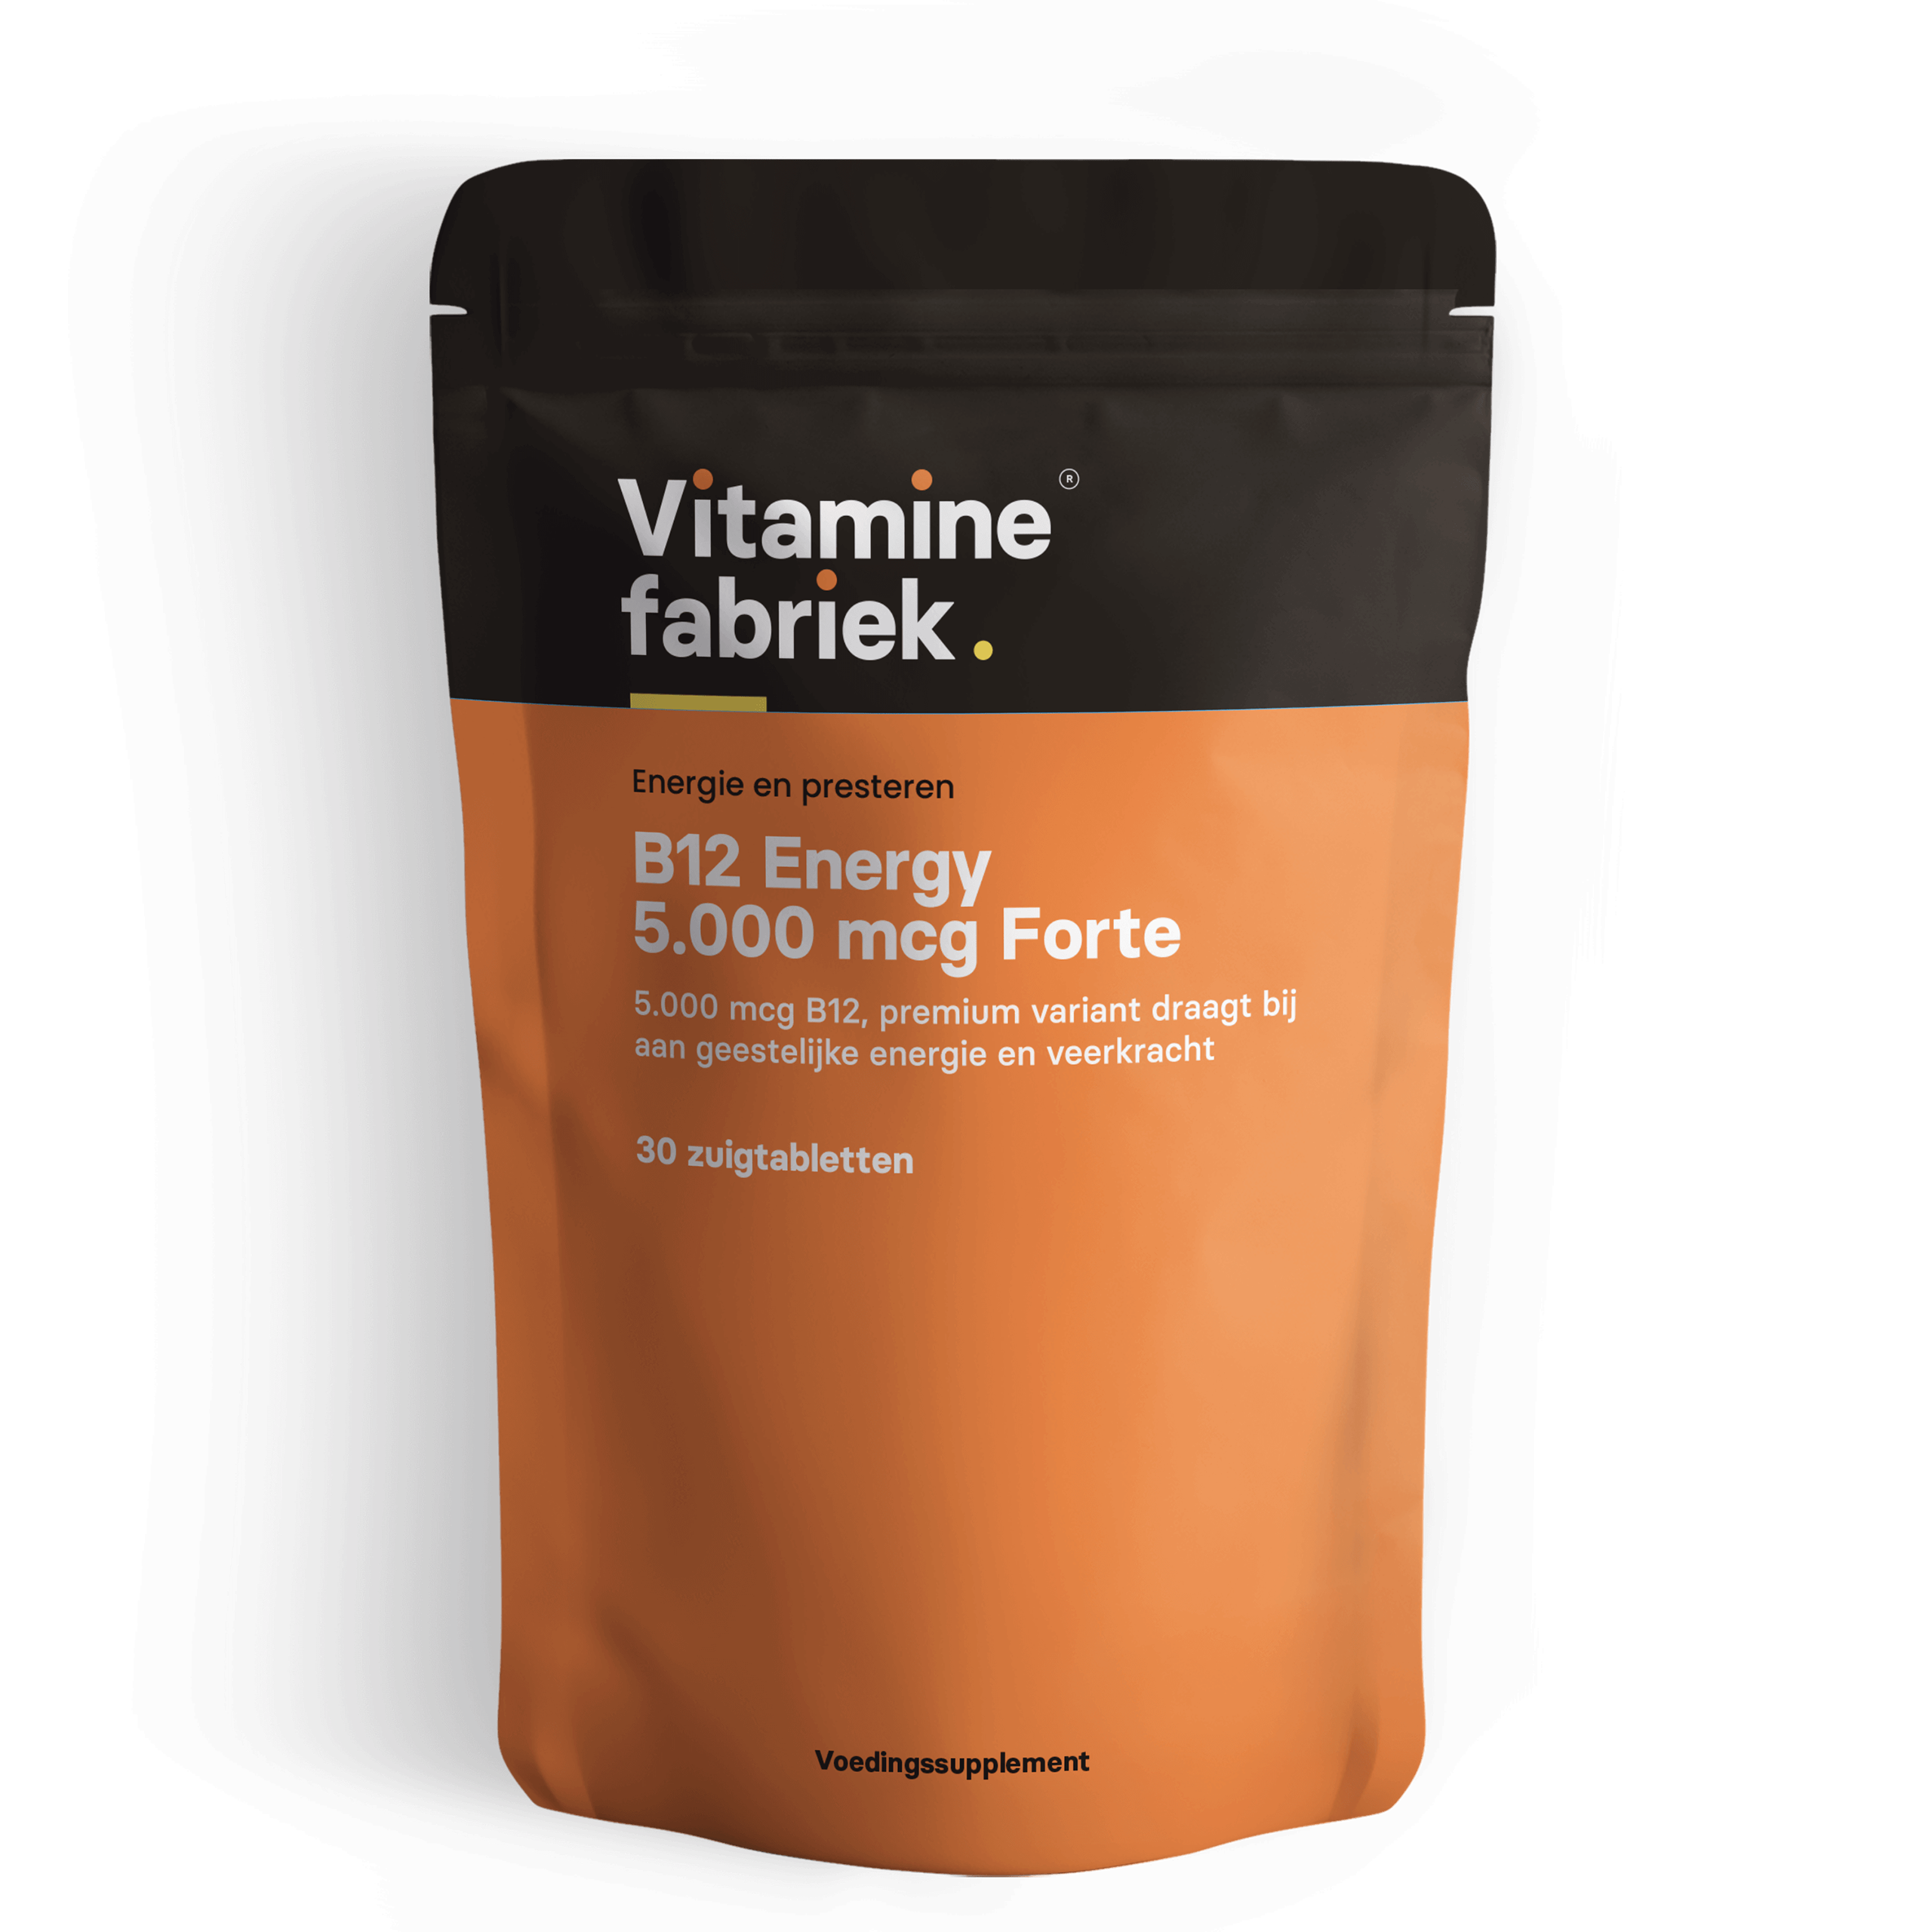 B12 Energy - 5000 mcg Forte - 30 zuigtabletten - Vitaminefabriek.nl